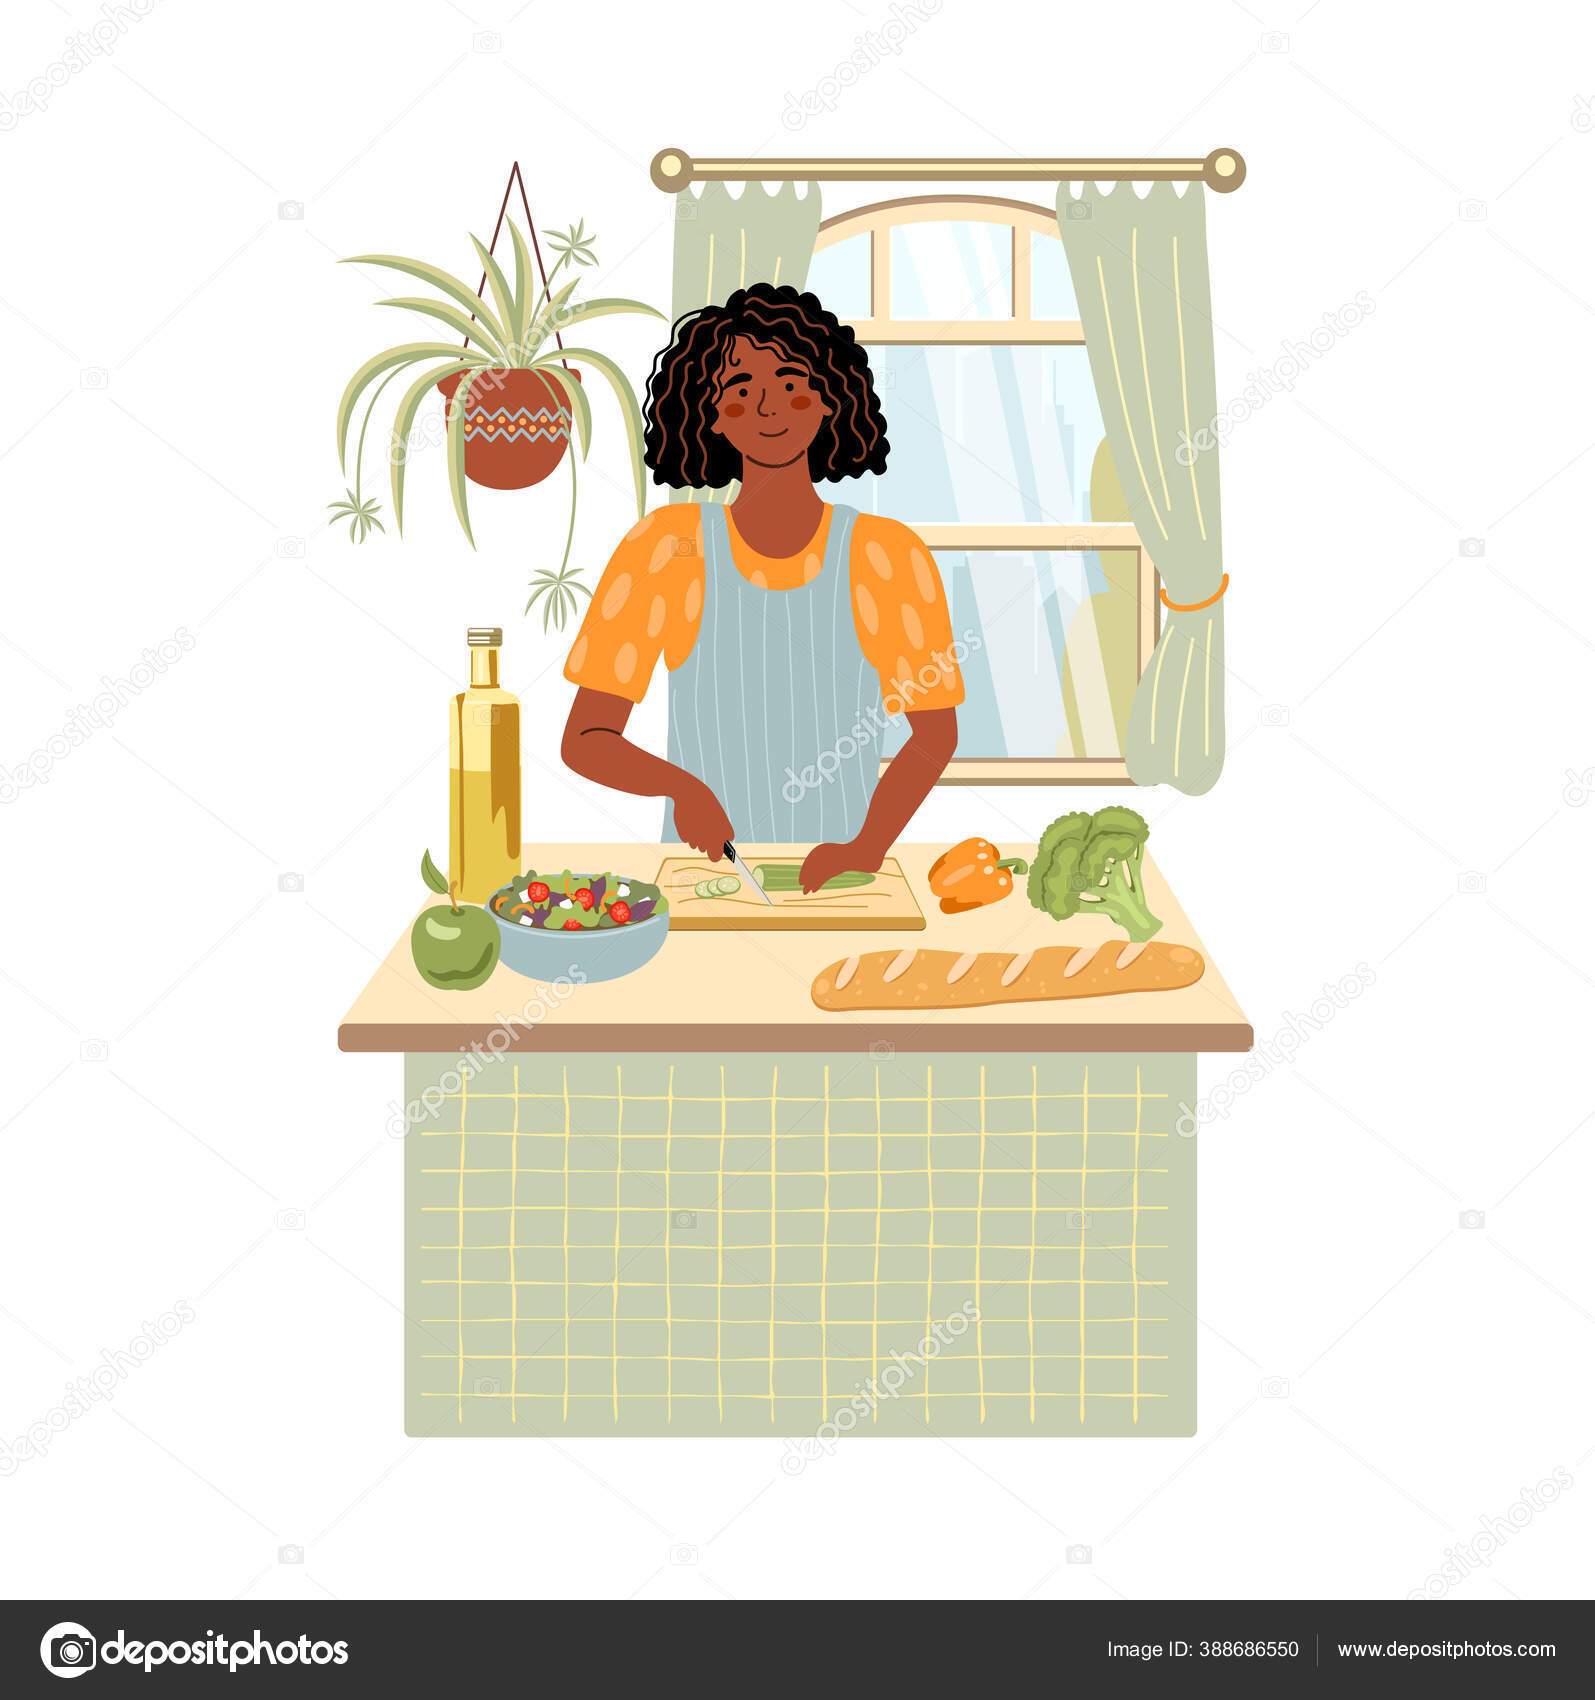 https://st4.depositphotos.com/32629564/38868/v/1600/depositphotos_388686550-stock-illustration-smiling-african-american-woman-cooking.jpg